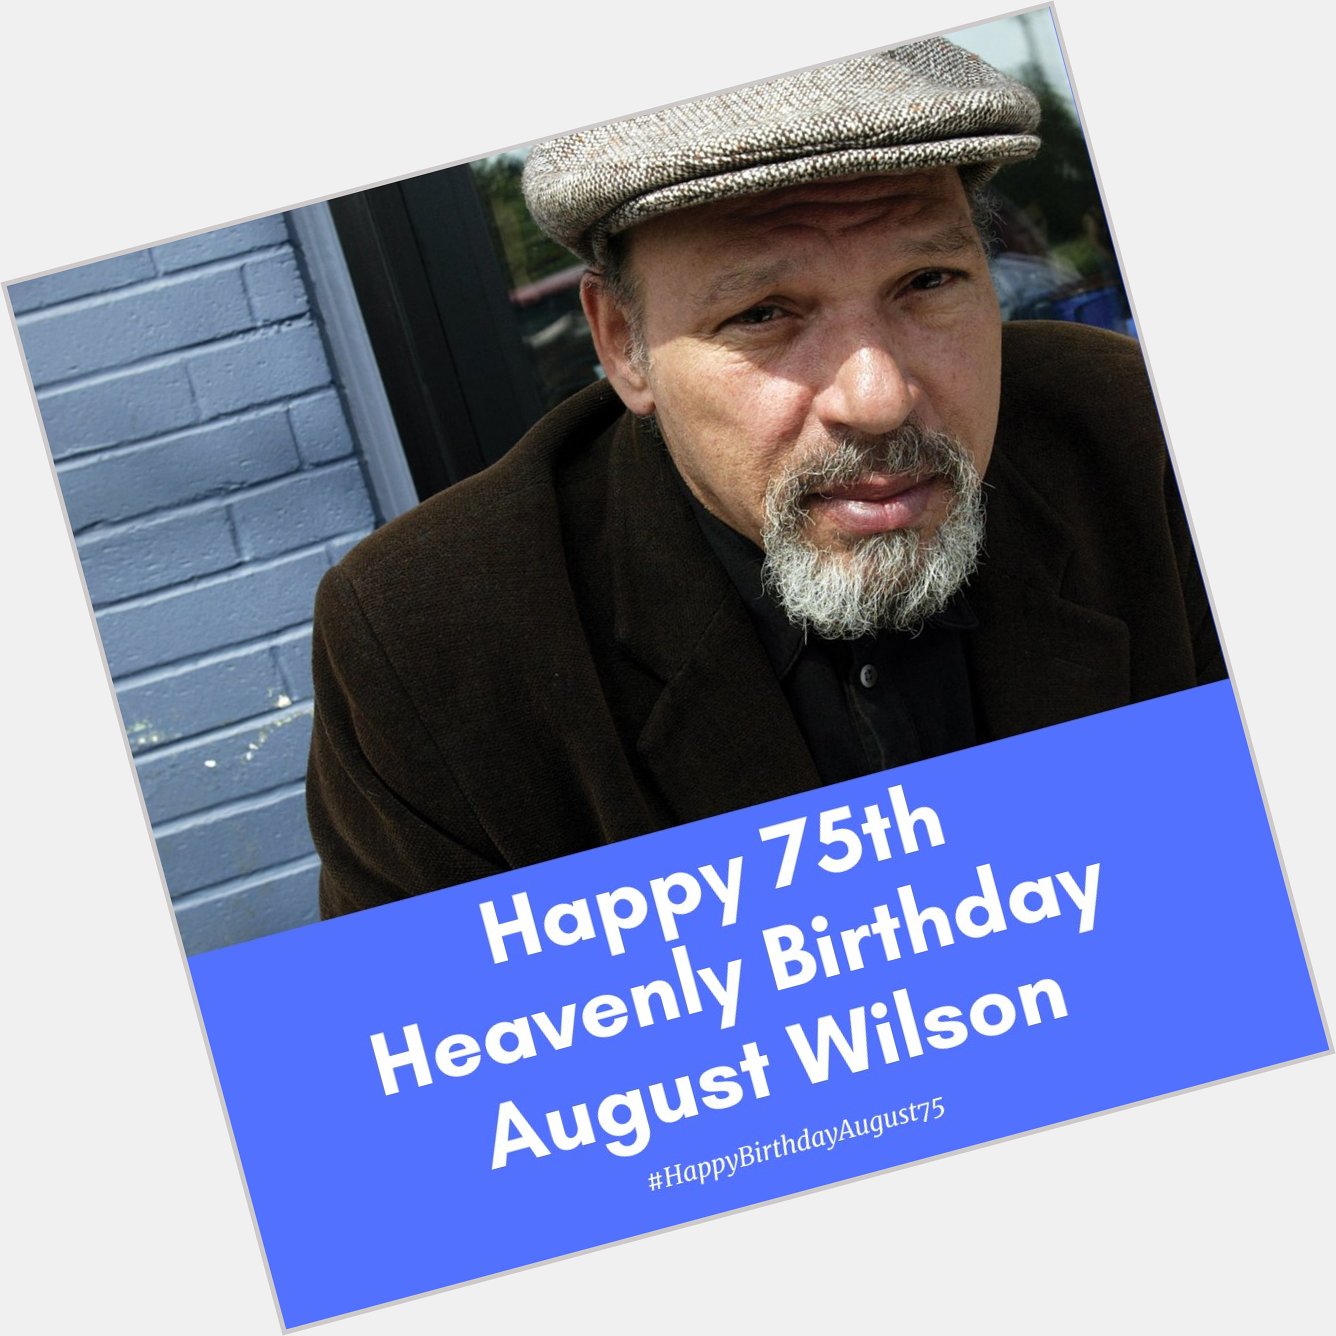 Happy 75th Heavenly Birthday August Wilson!   